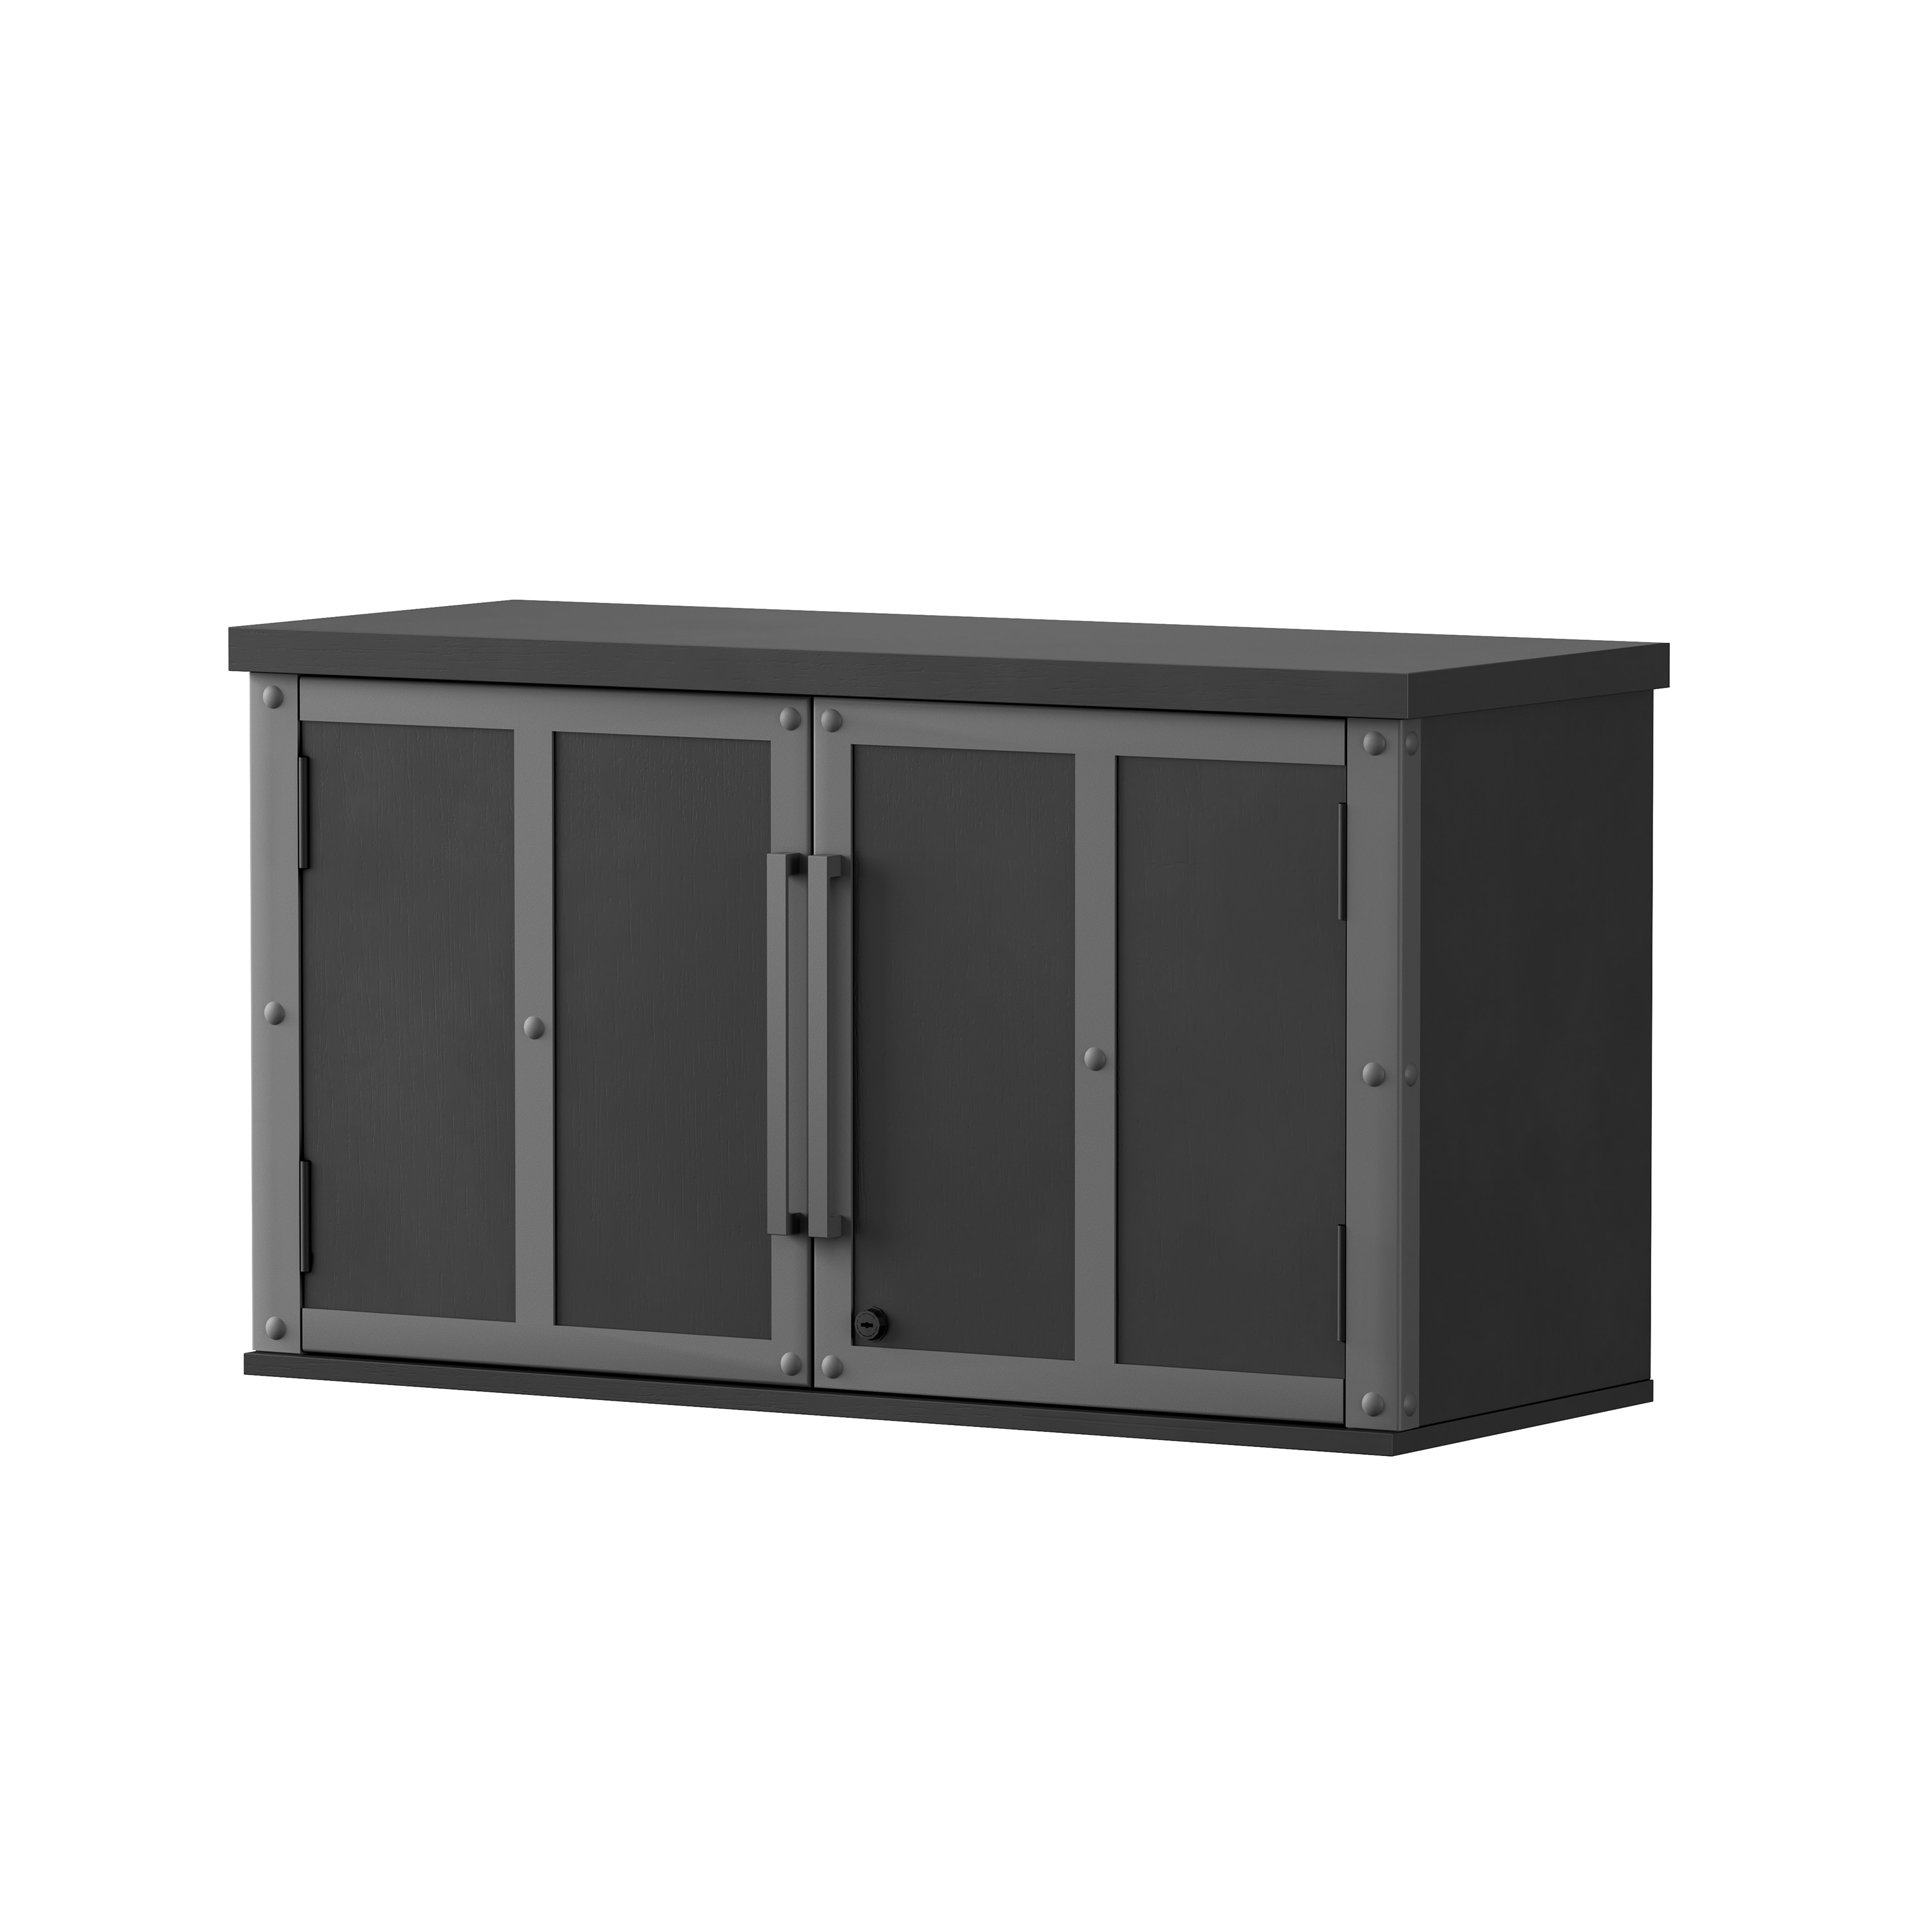 Keoki Composite Wood Freestanding or Wall-mounted Garage Cabinet in Black (36-in W x 20-in H x 14-in D) | - Scott Living SL36WBKK-1